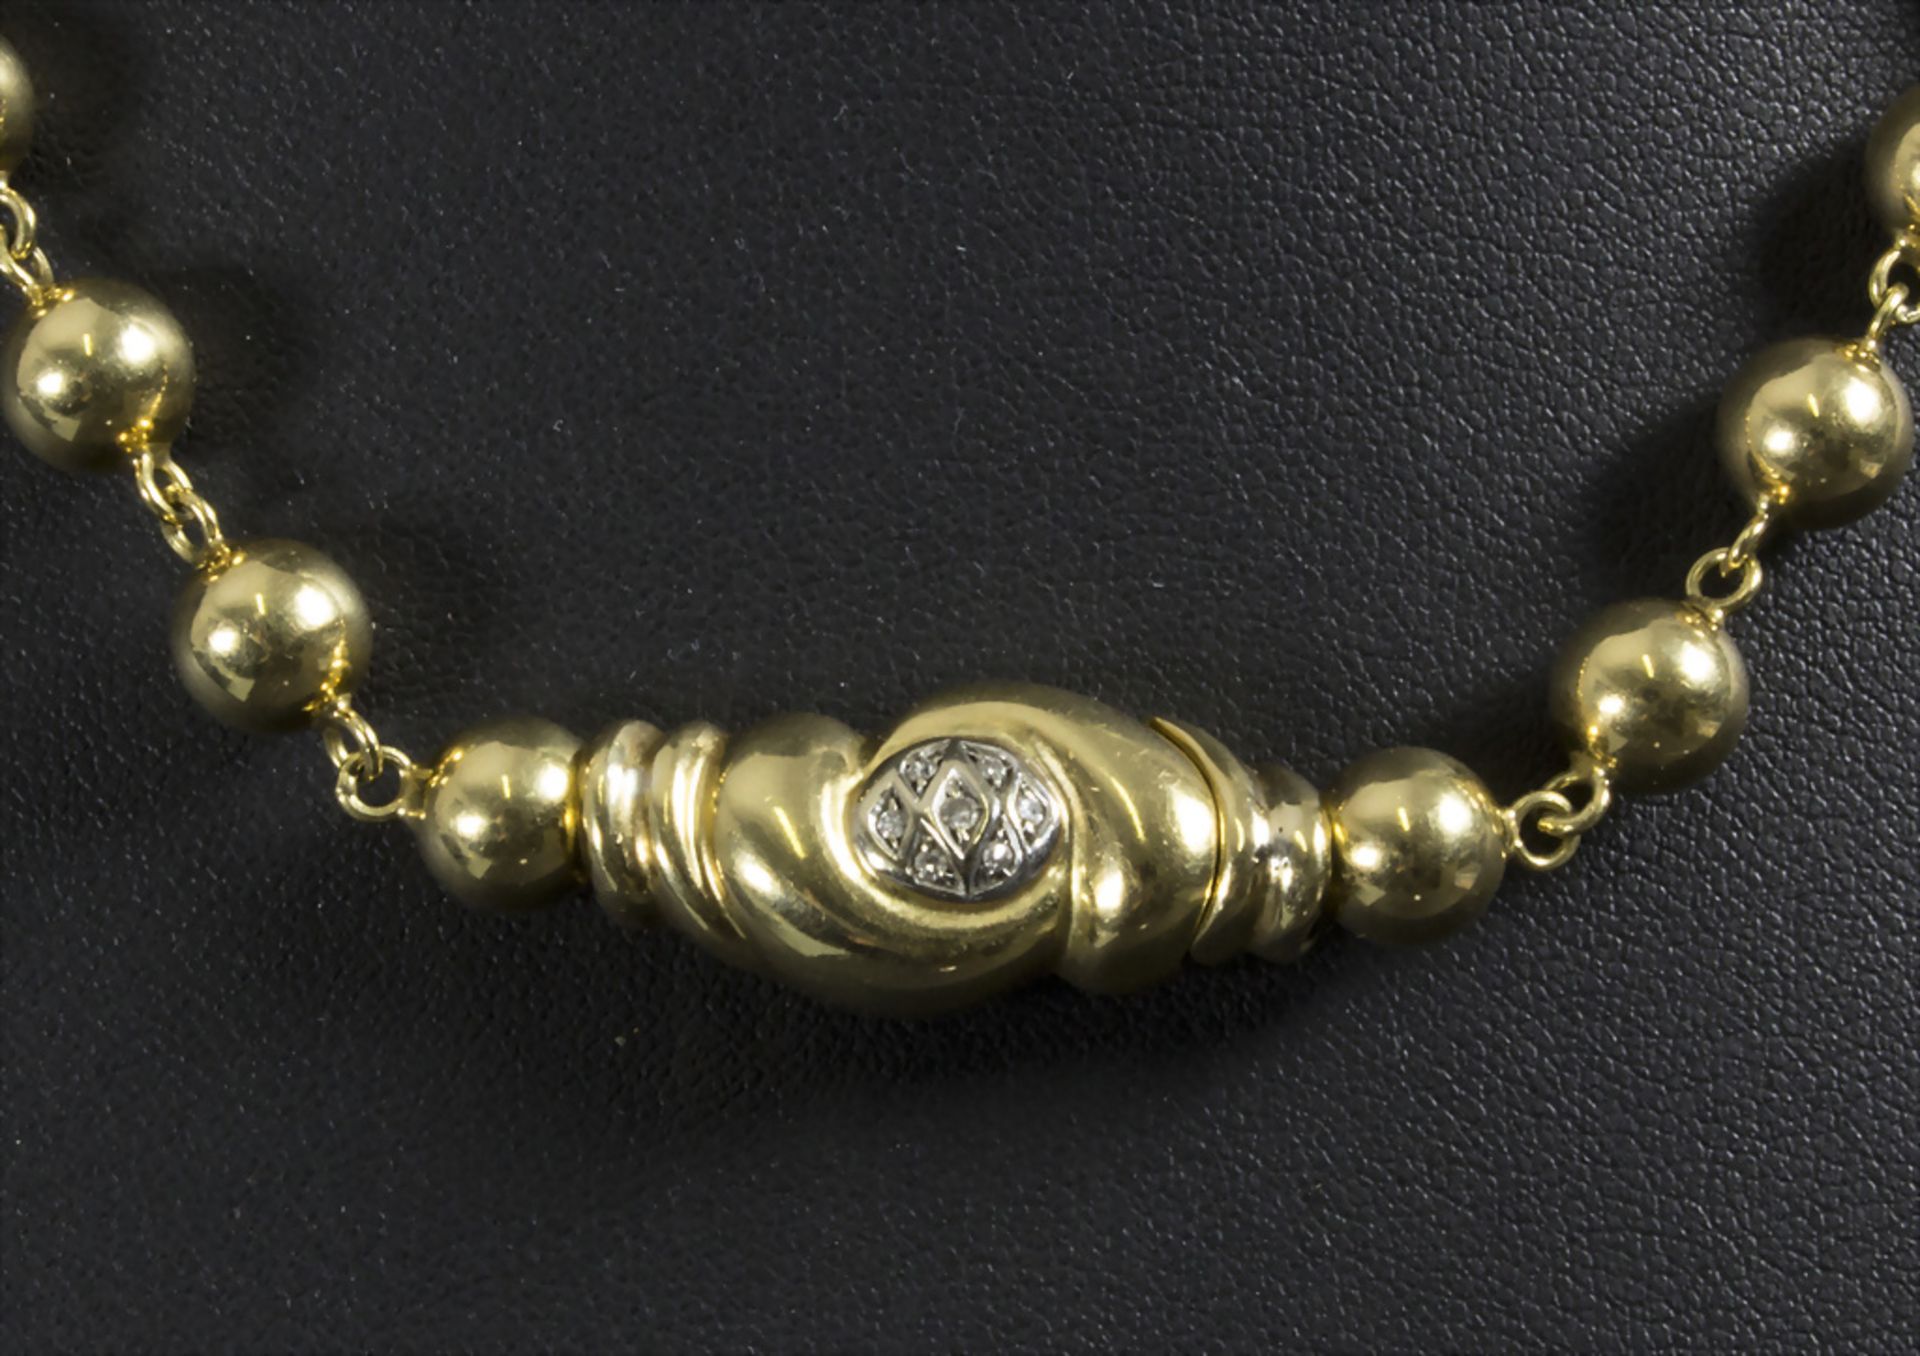 Damen Collier mit Diamanten / An 18ct gold necklace with diamonds, Italien, um 1970 - Image 2 of 2